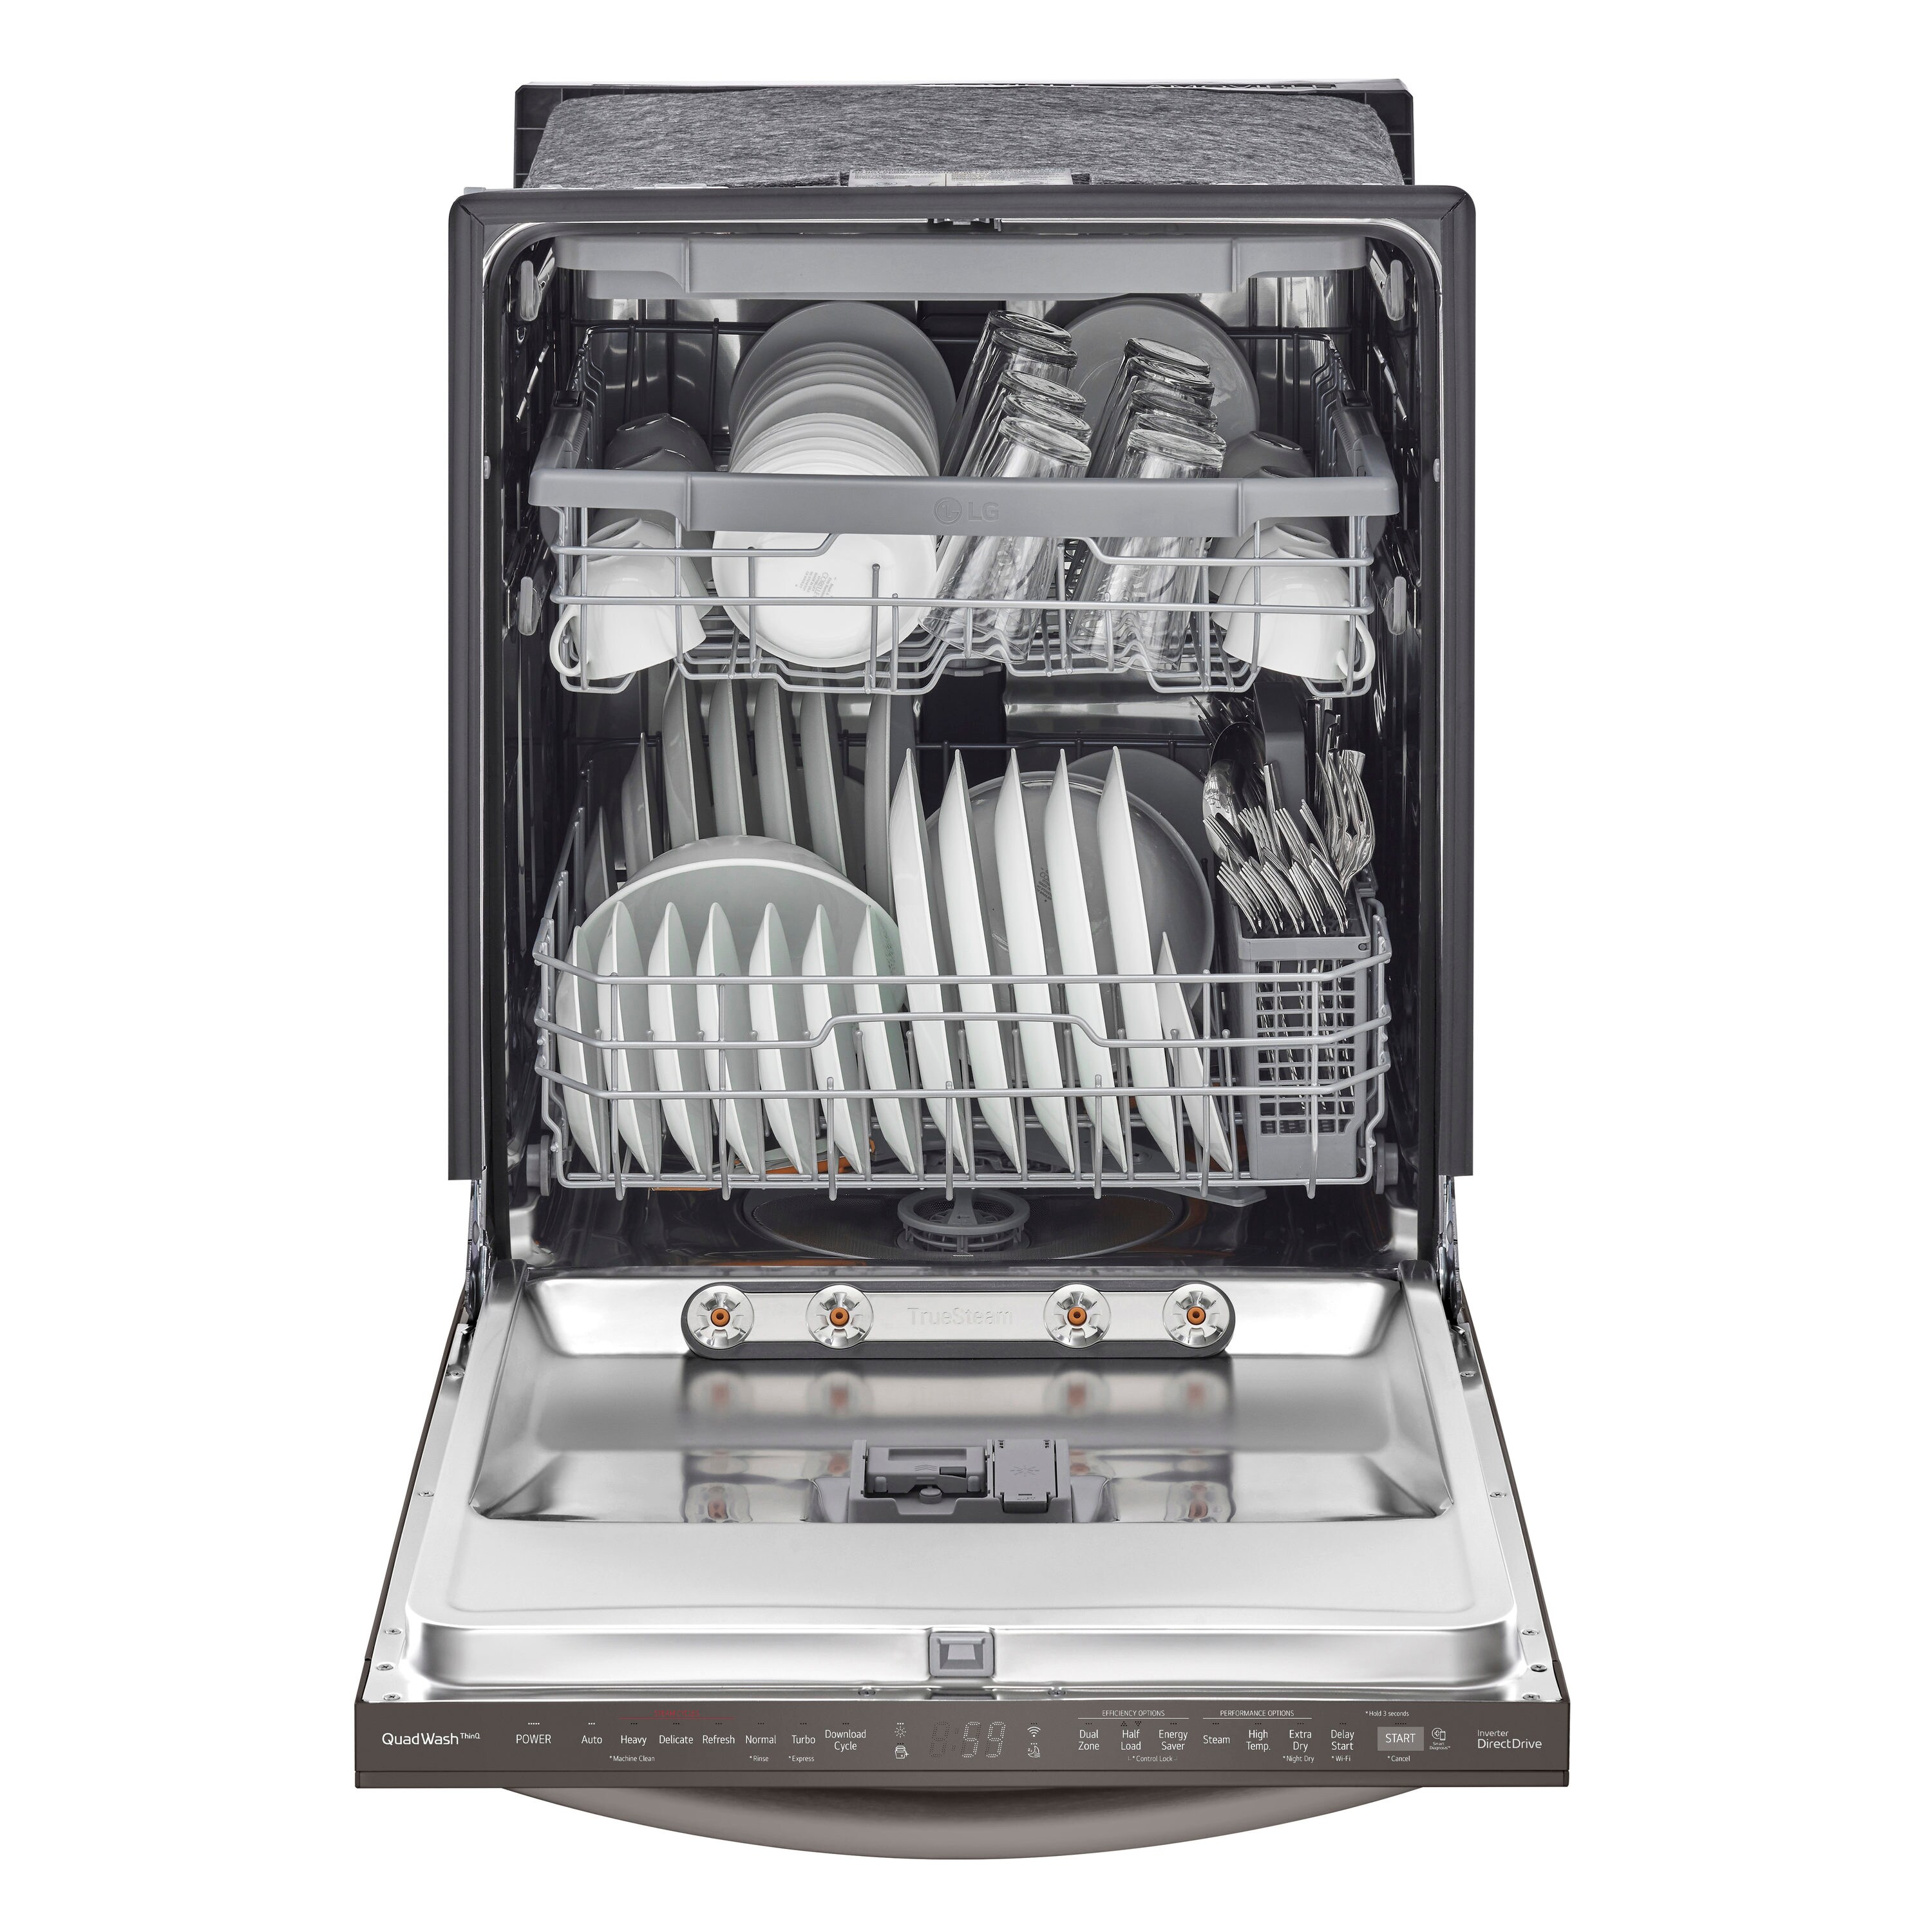 Six Tines LG Dishwasher Model LDS5560ST Rack 10 1/2" Length 